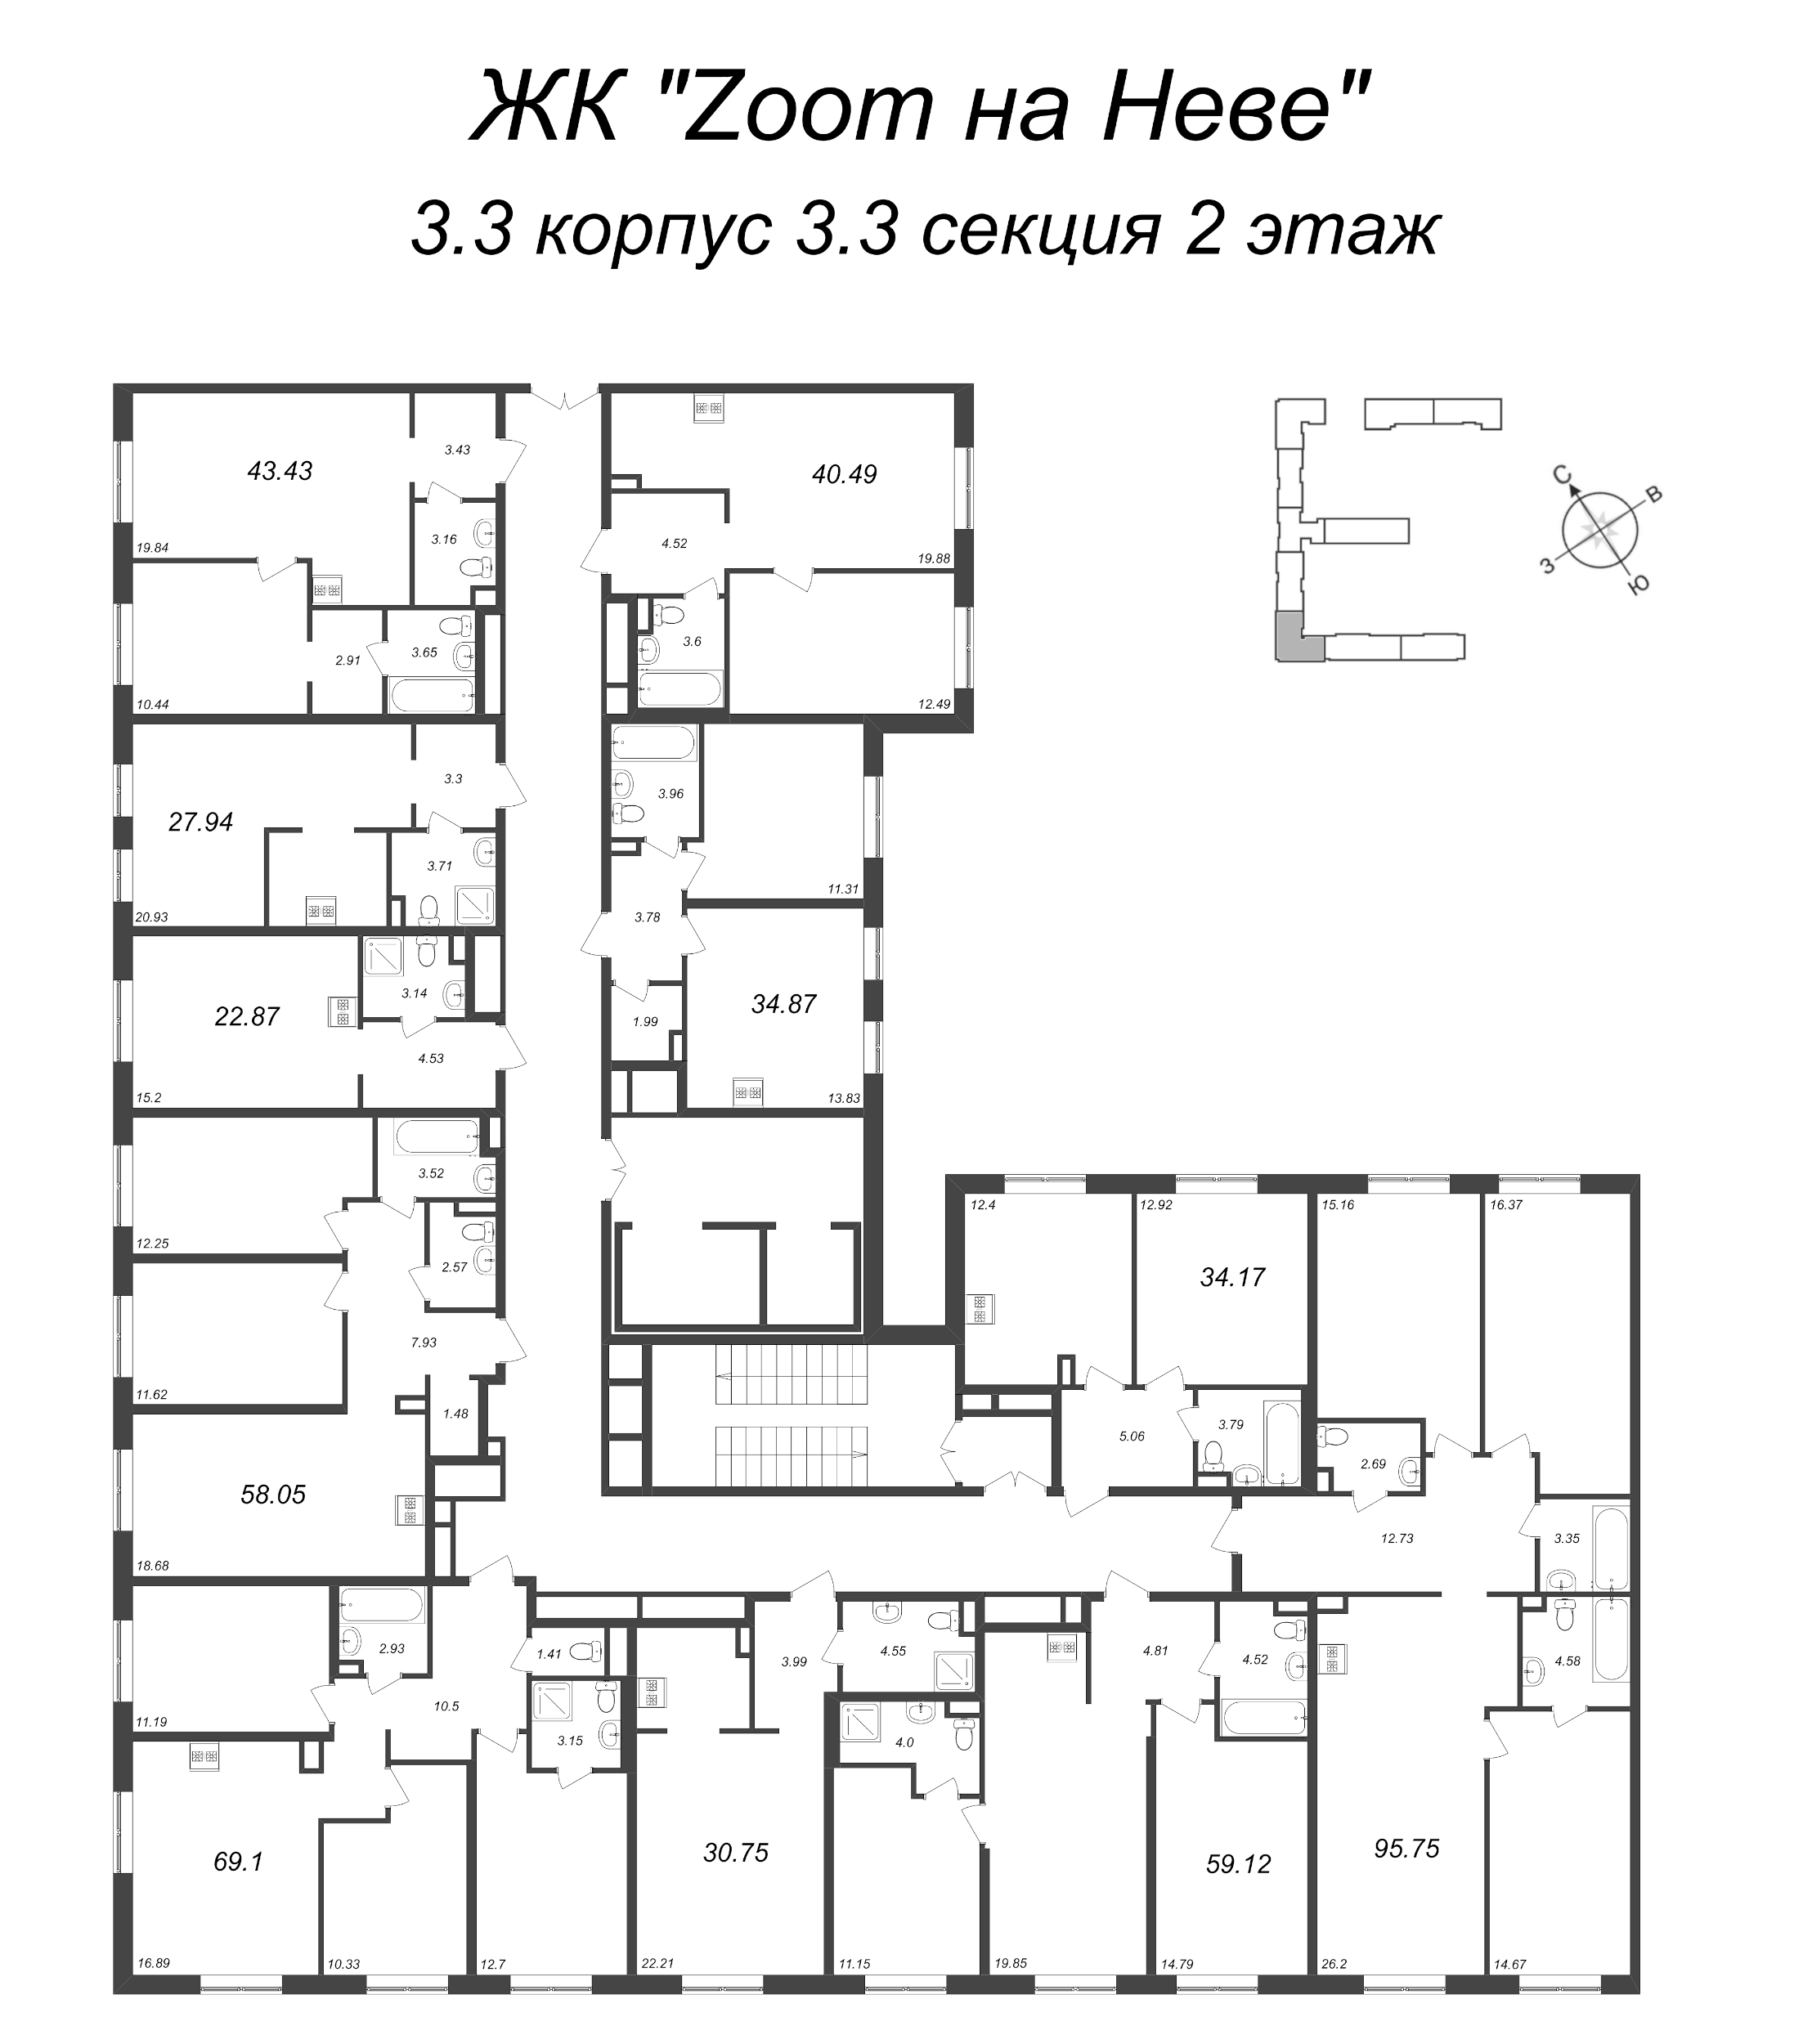 2-комнатная (Евро) квартира, 40.49 м² в ЖК "Zoom на Неве" - планировка этажа